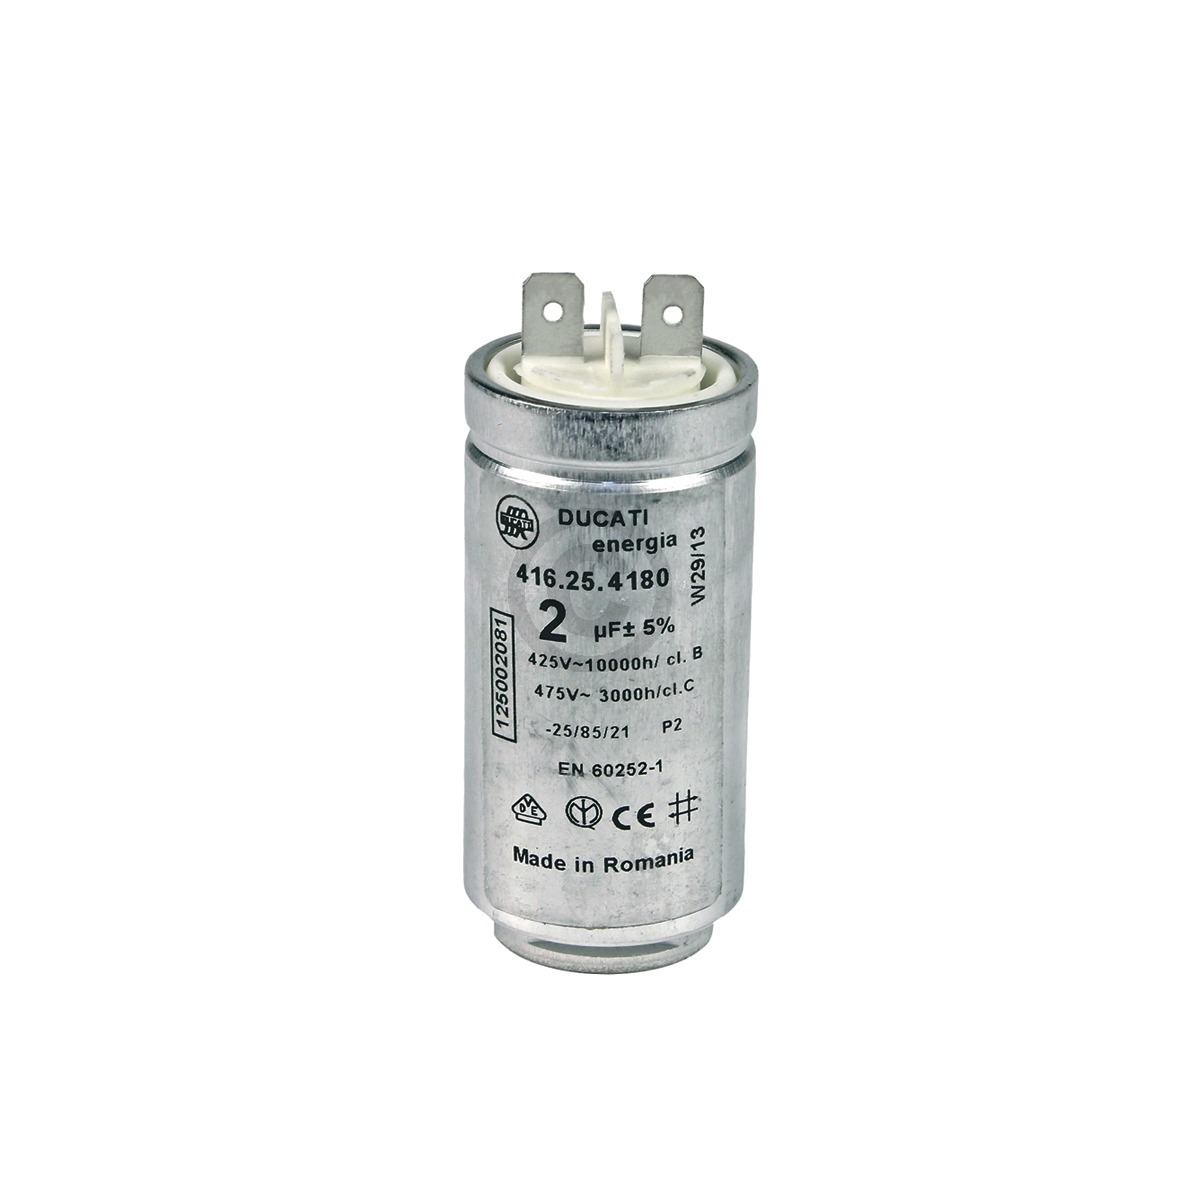 Kondensator AEG 125002081/3 2µF 425/475V mit Steckfahnen für Trockner